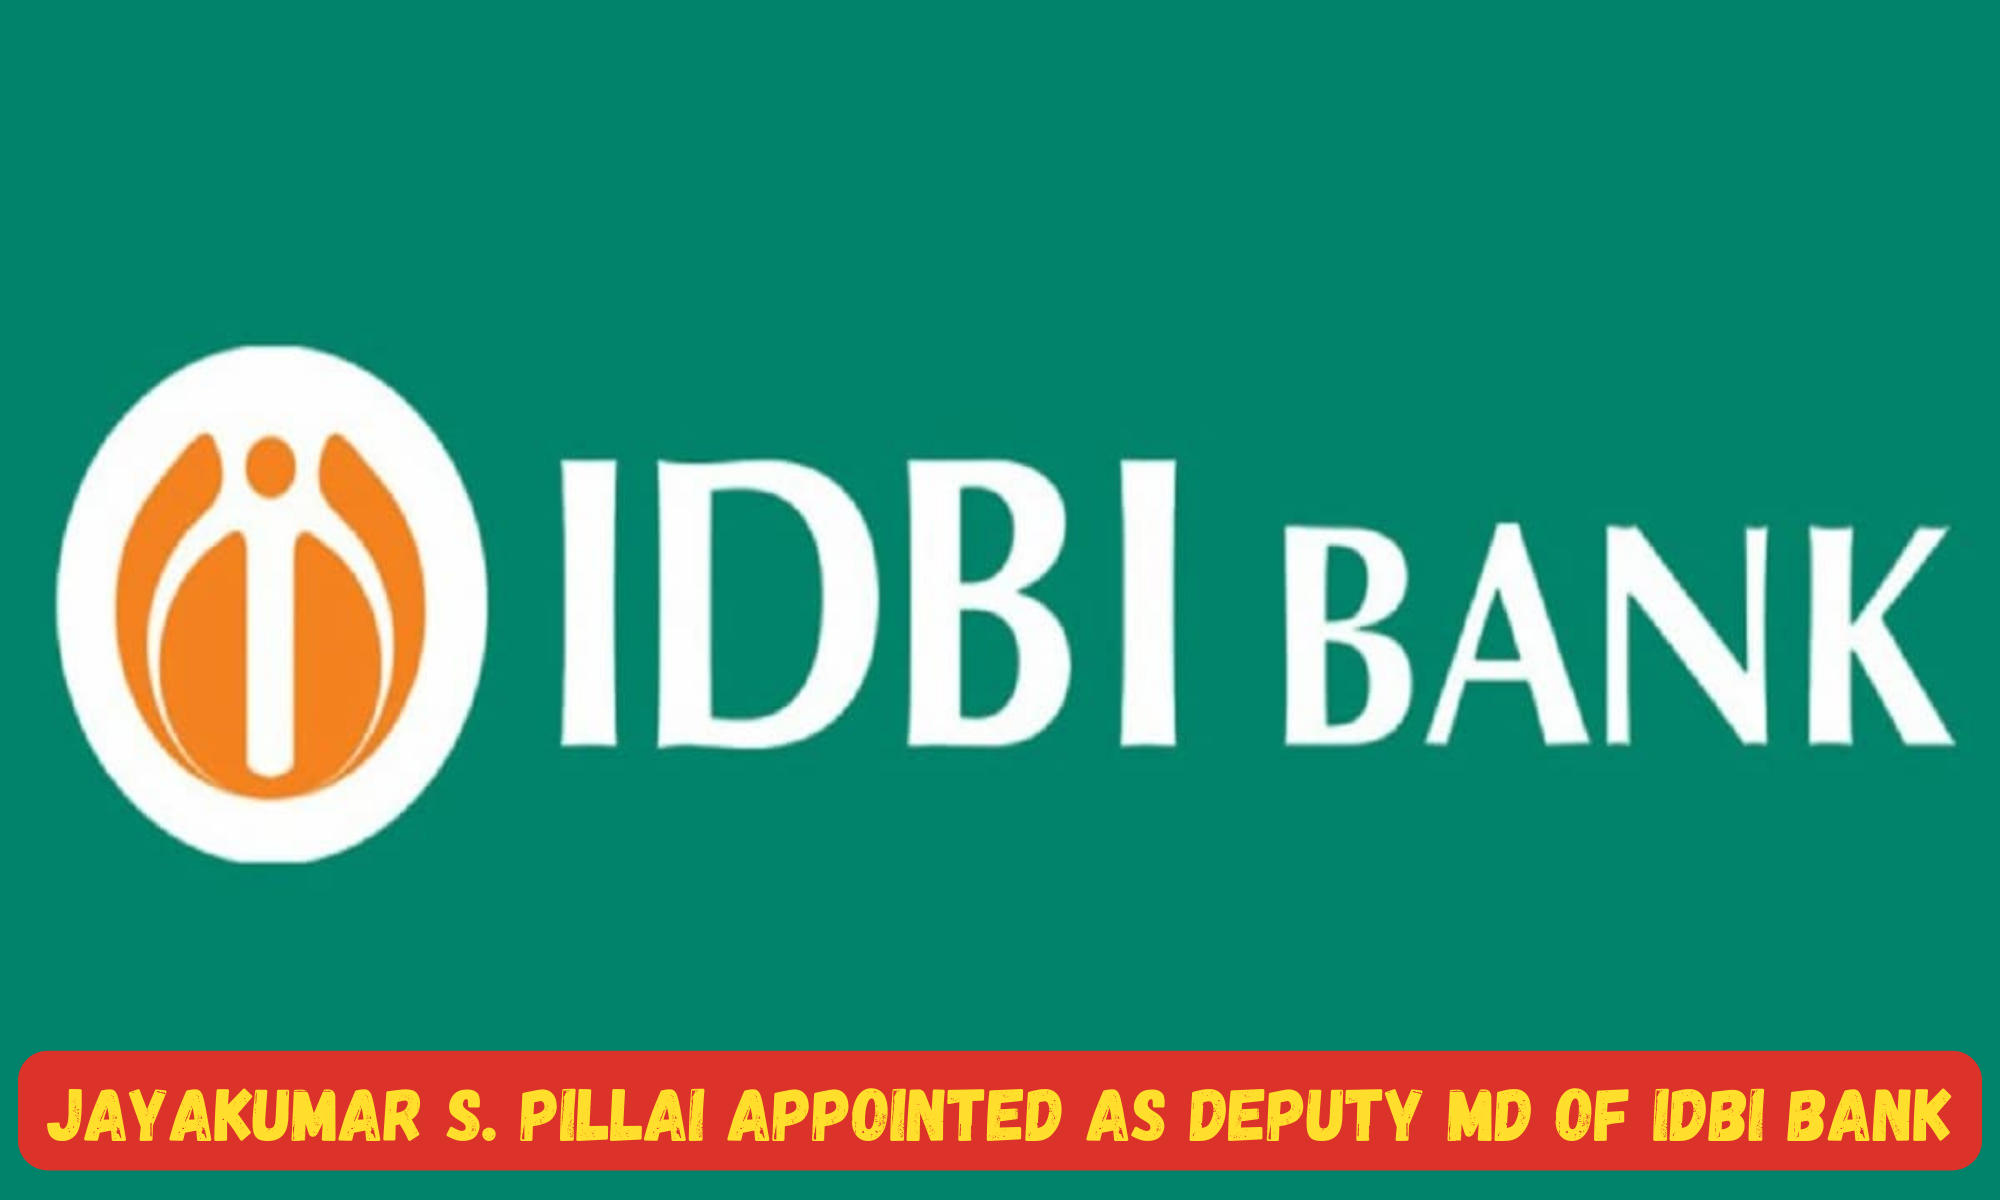 Jayakumar S. Pillai Appointed as Deputy MD of IDBI Bank